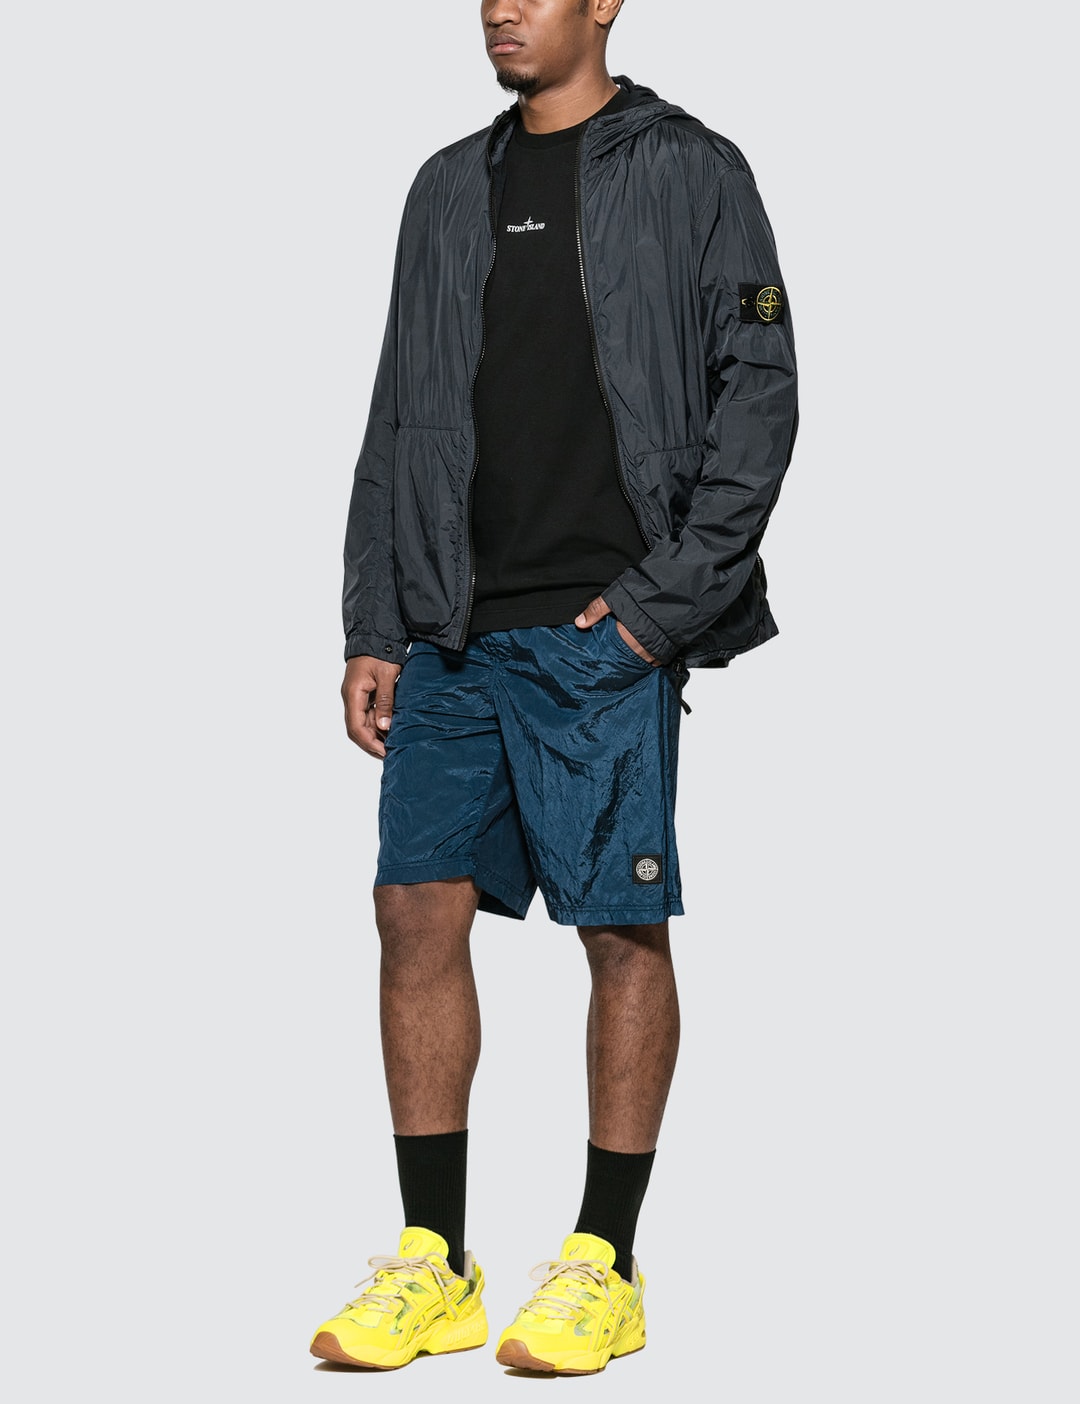 Stone Island - Nylon Shorts With Side Pocket | HBX - Globally Curated ...